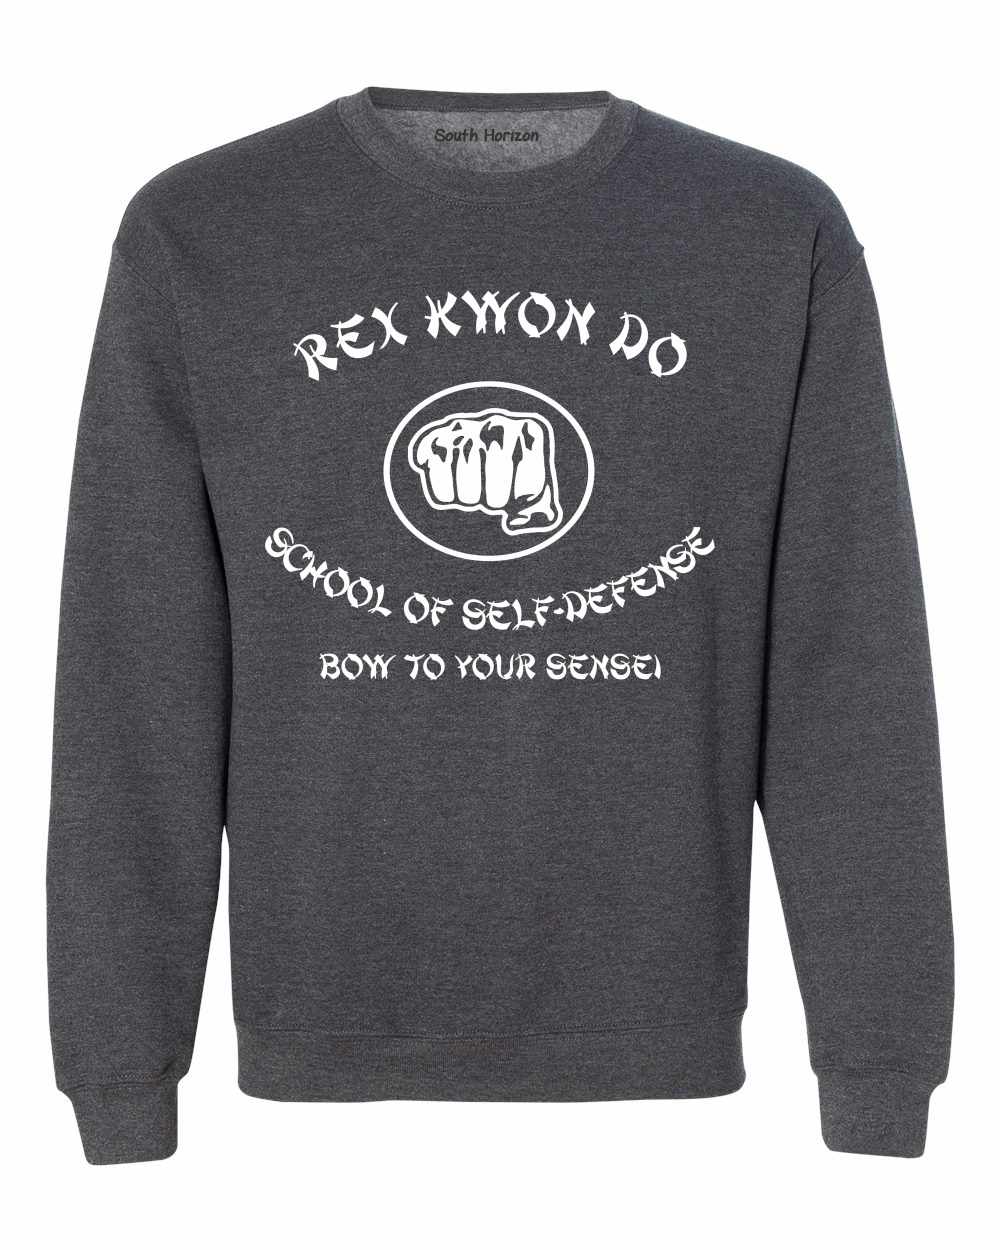 REX KWON DO SCHOOL OF SELF DEFENSE on SweatShirt